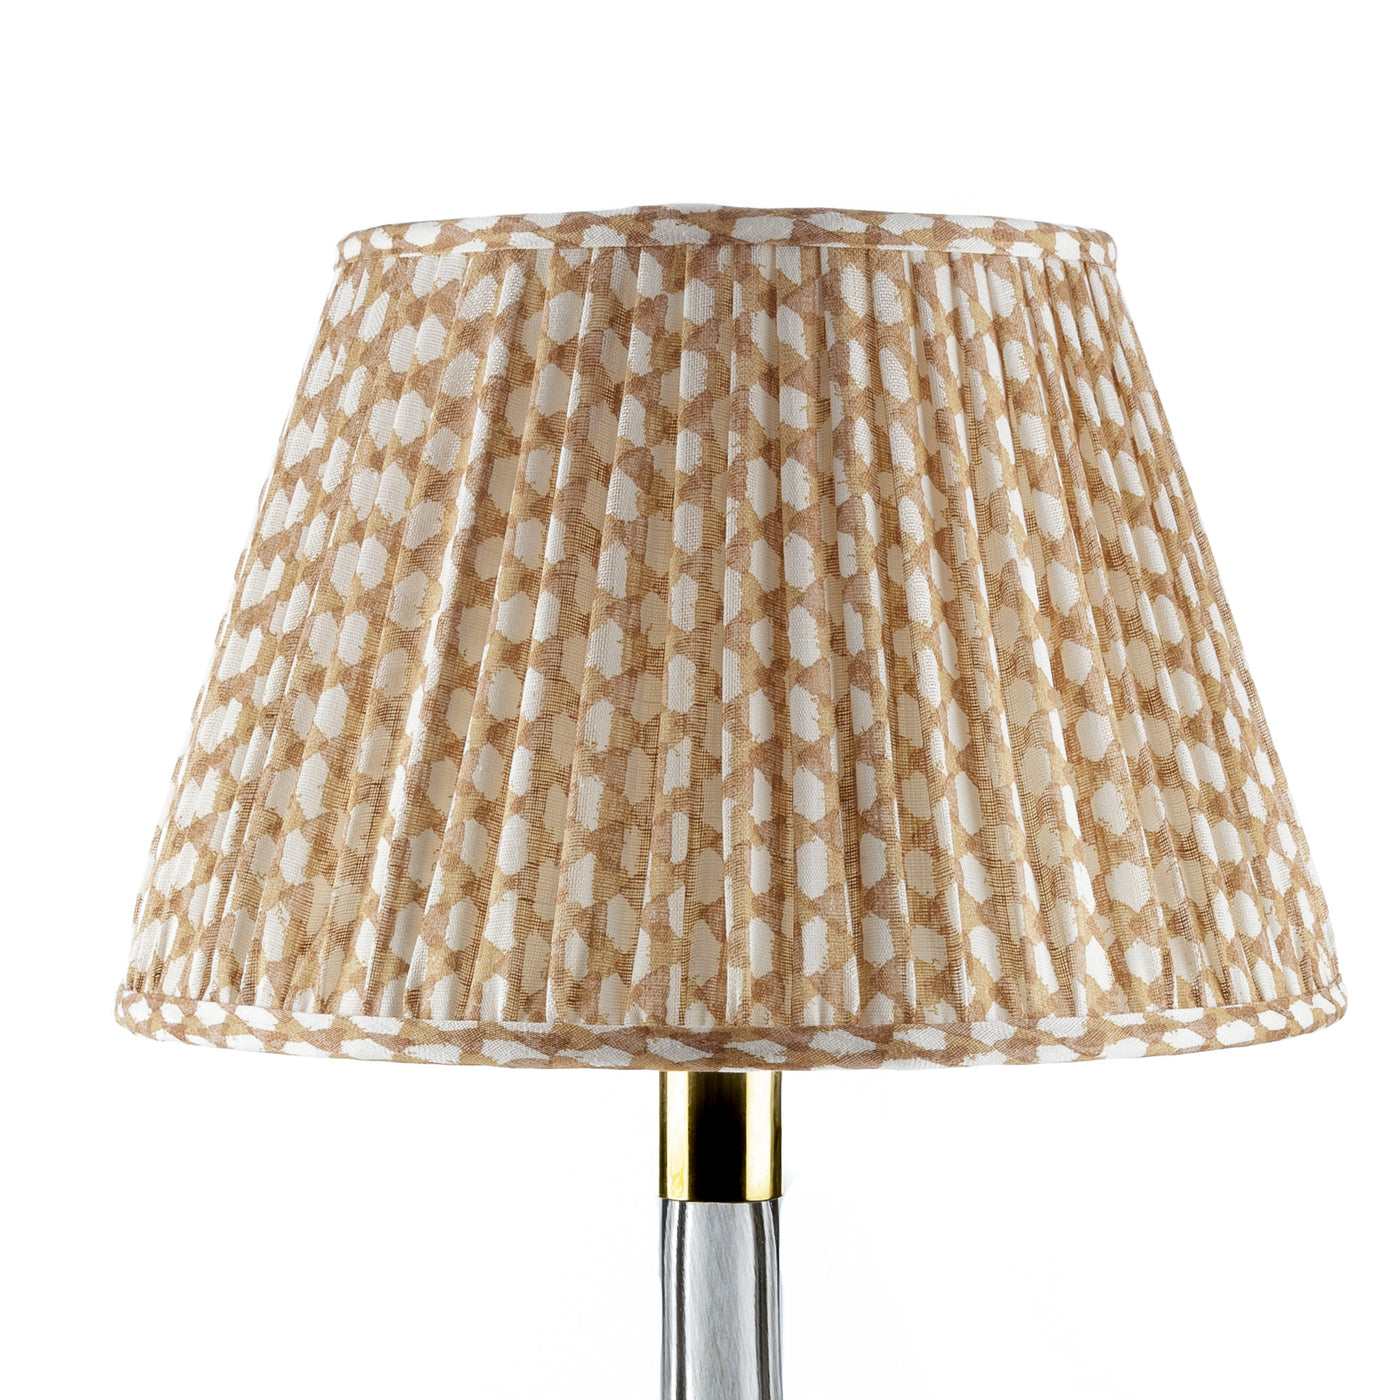 6" Fermoie in Nut Brown Wicker Lampshade | Newport Lamp And Shade | Located in Newport, RI